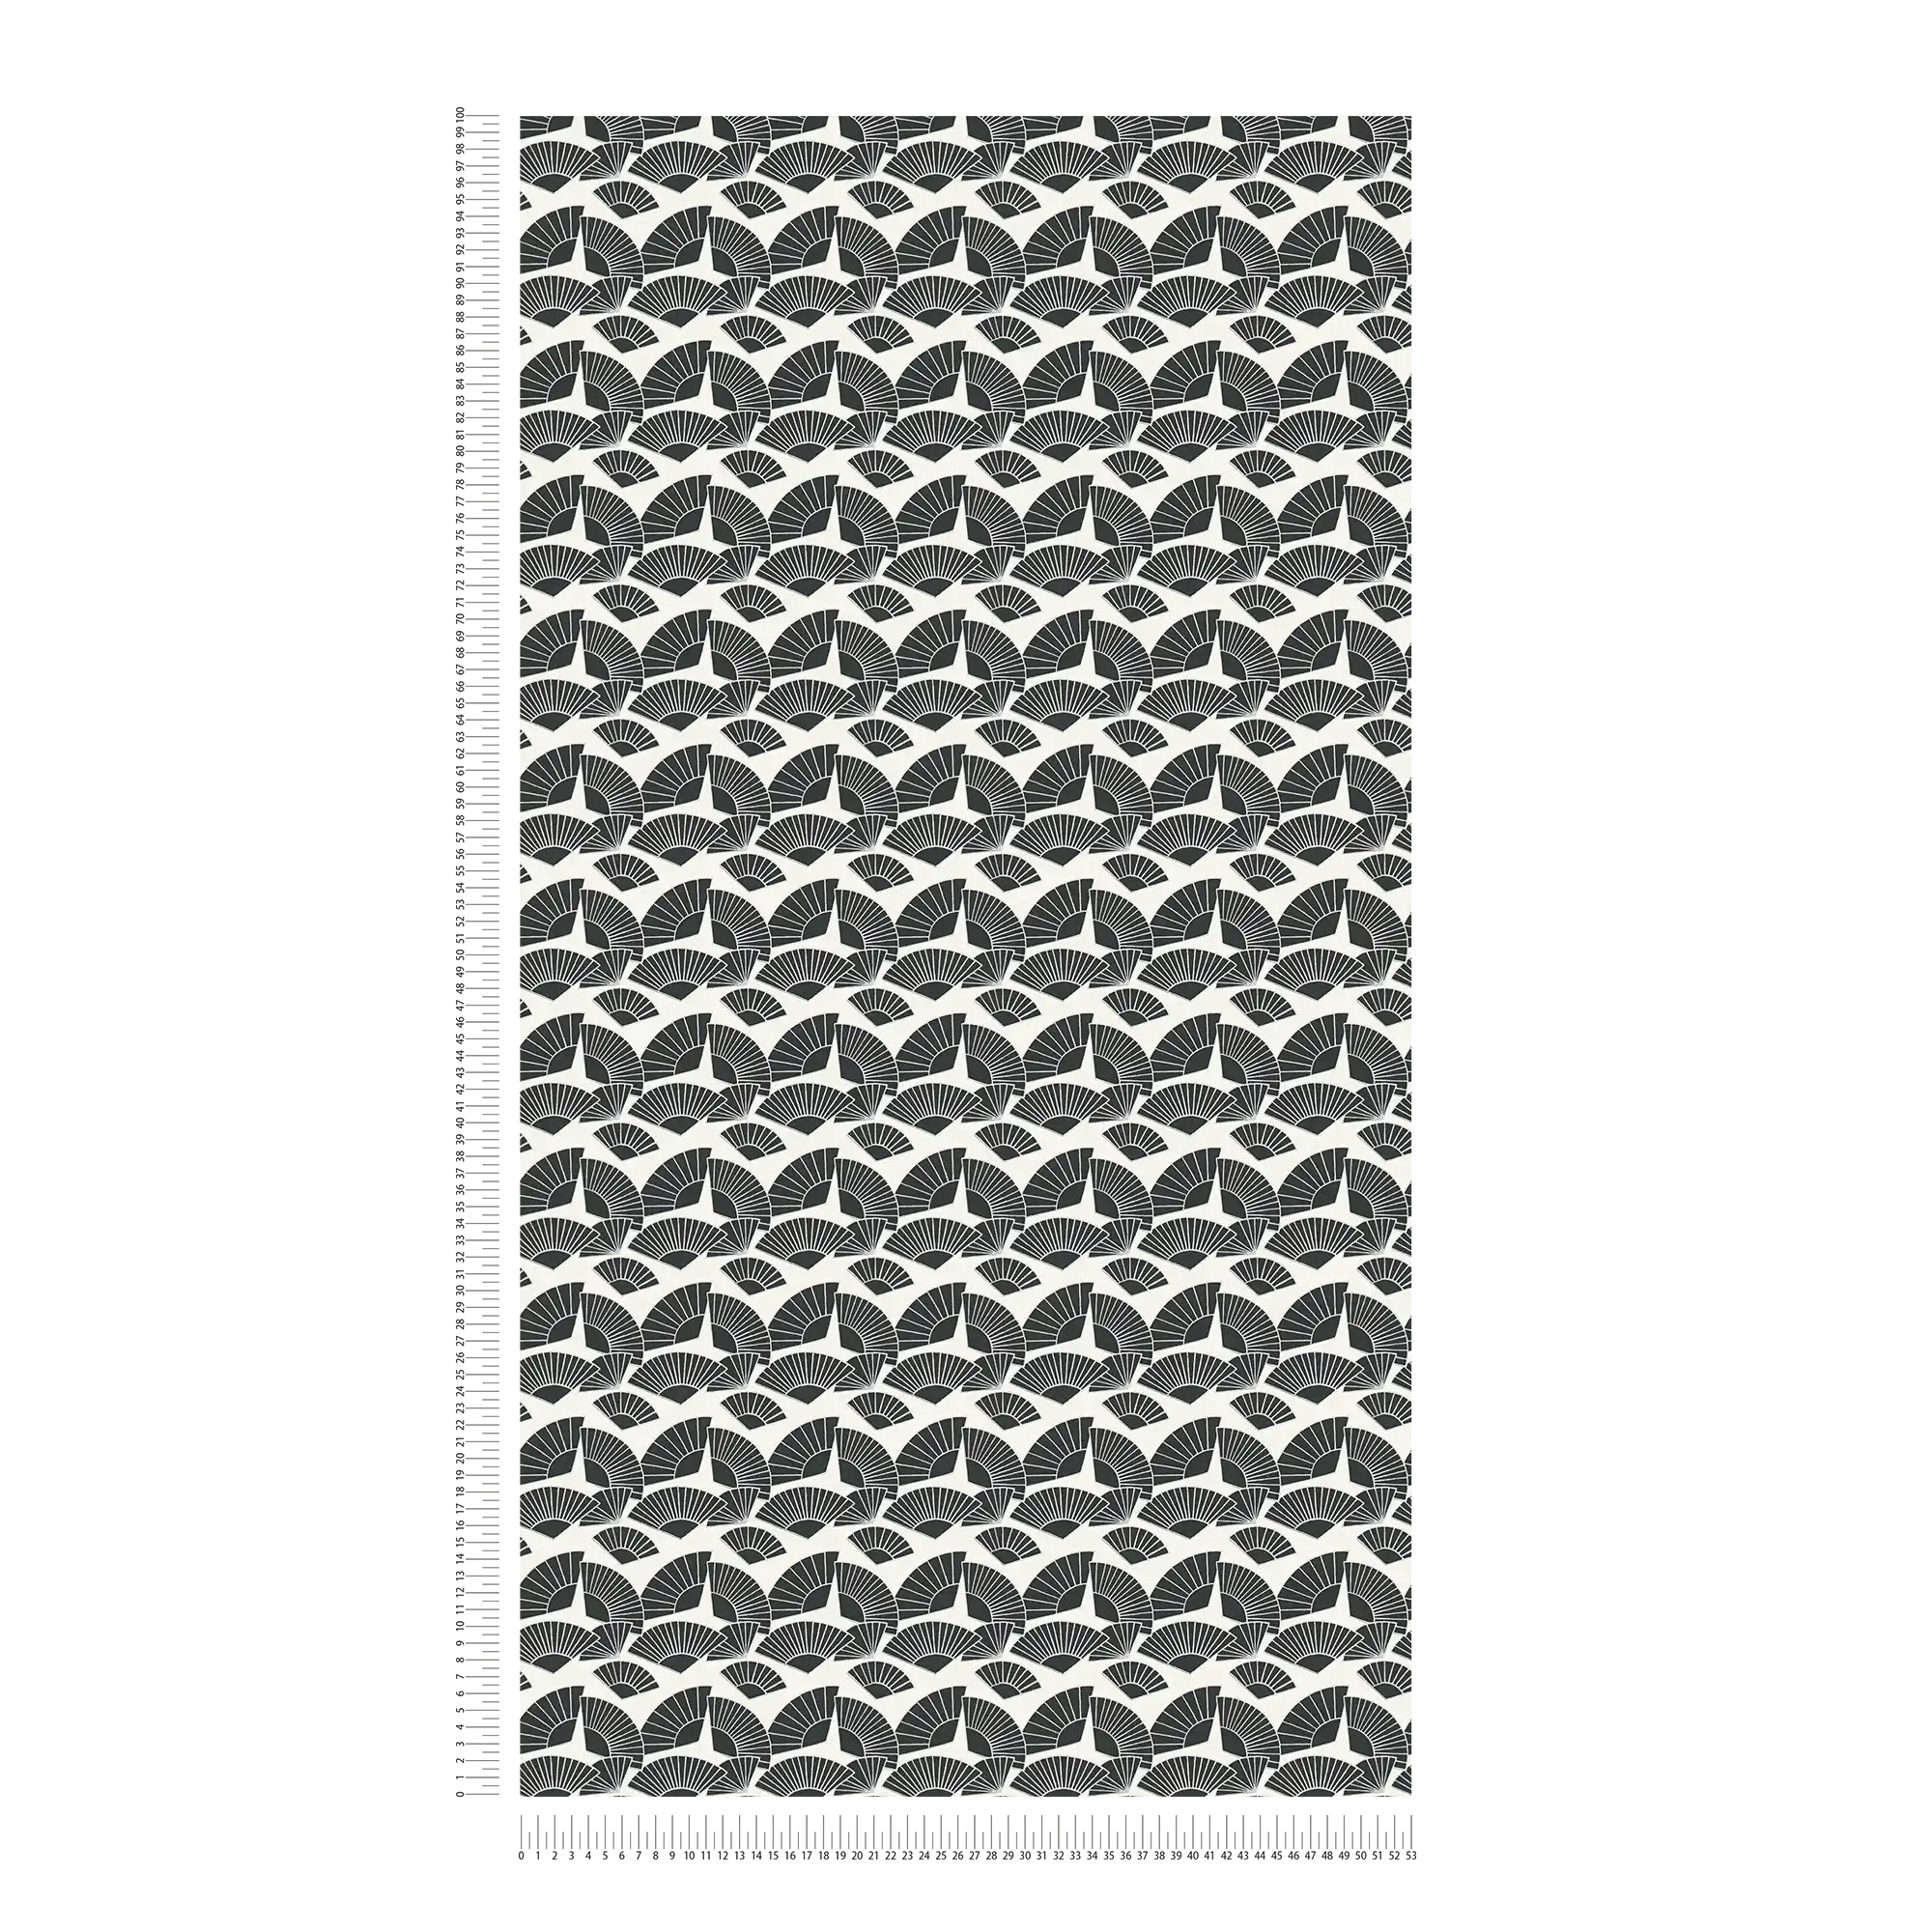             Wallpaper Karl LAGERFELD fan pattern - metallic, black, white
        